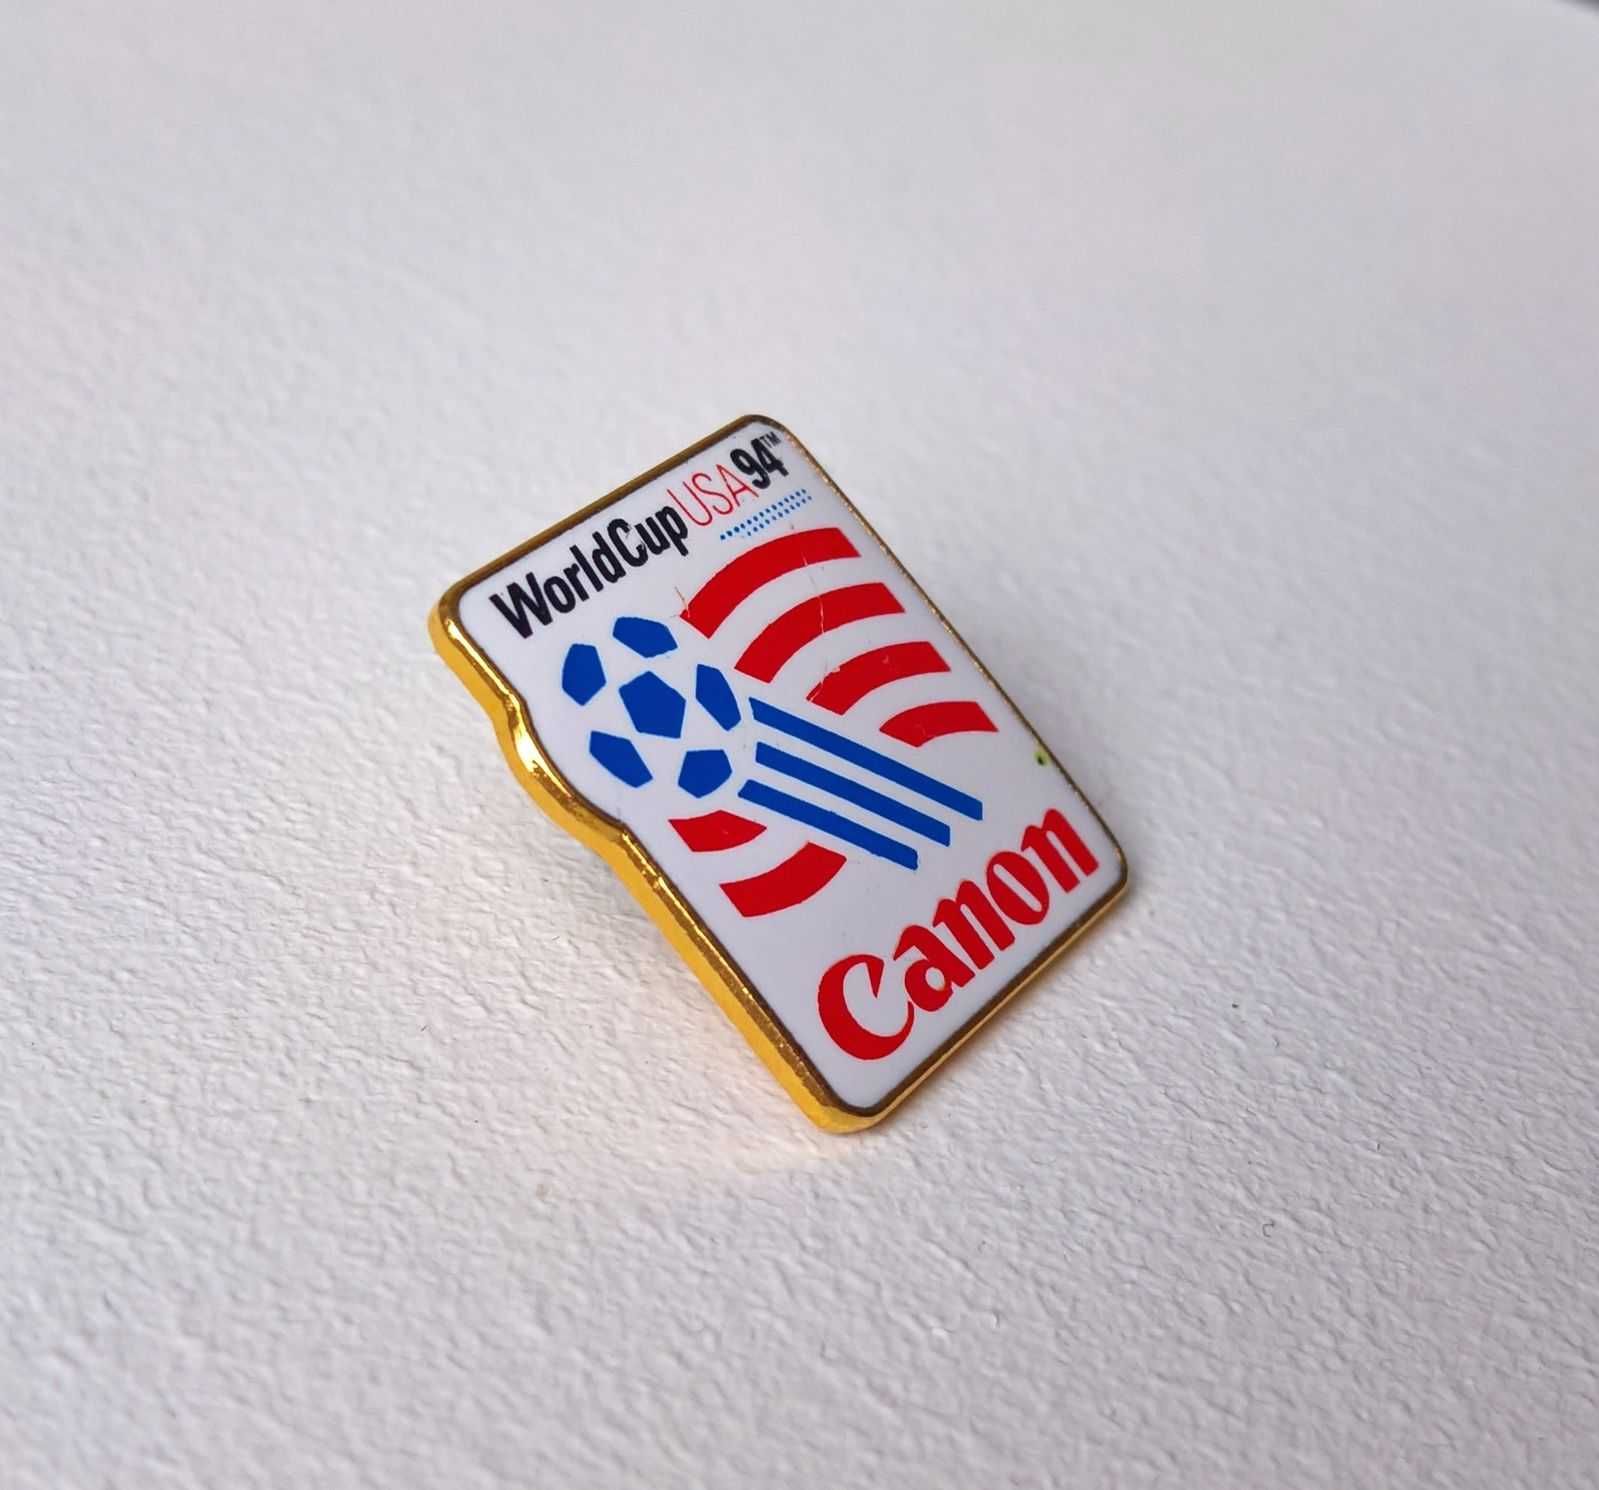 Oryginalna przypinka Canon World Cup USA 94 - Mundial